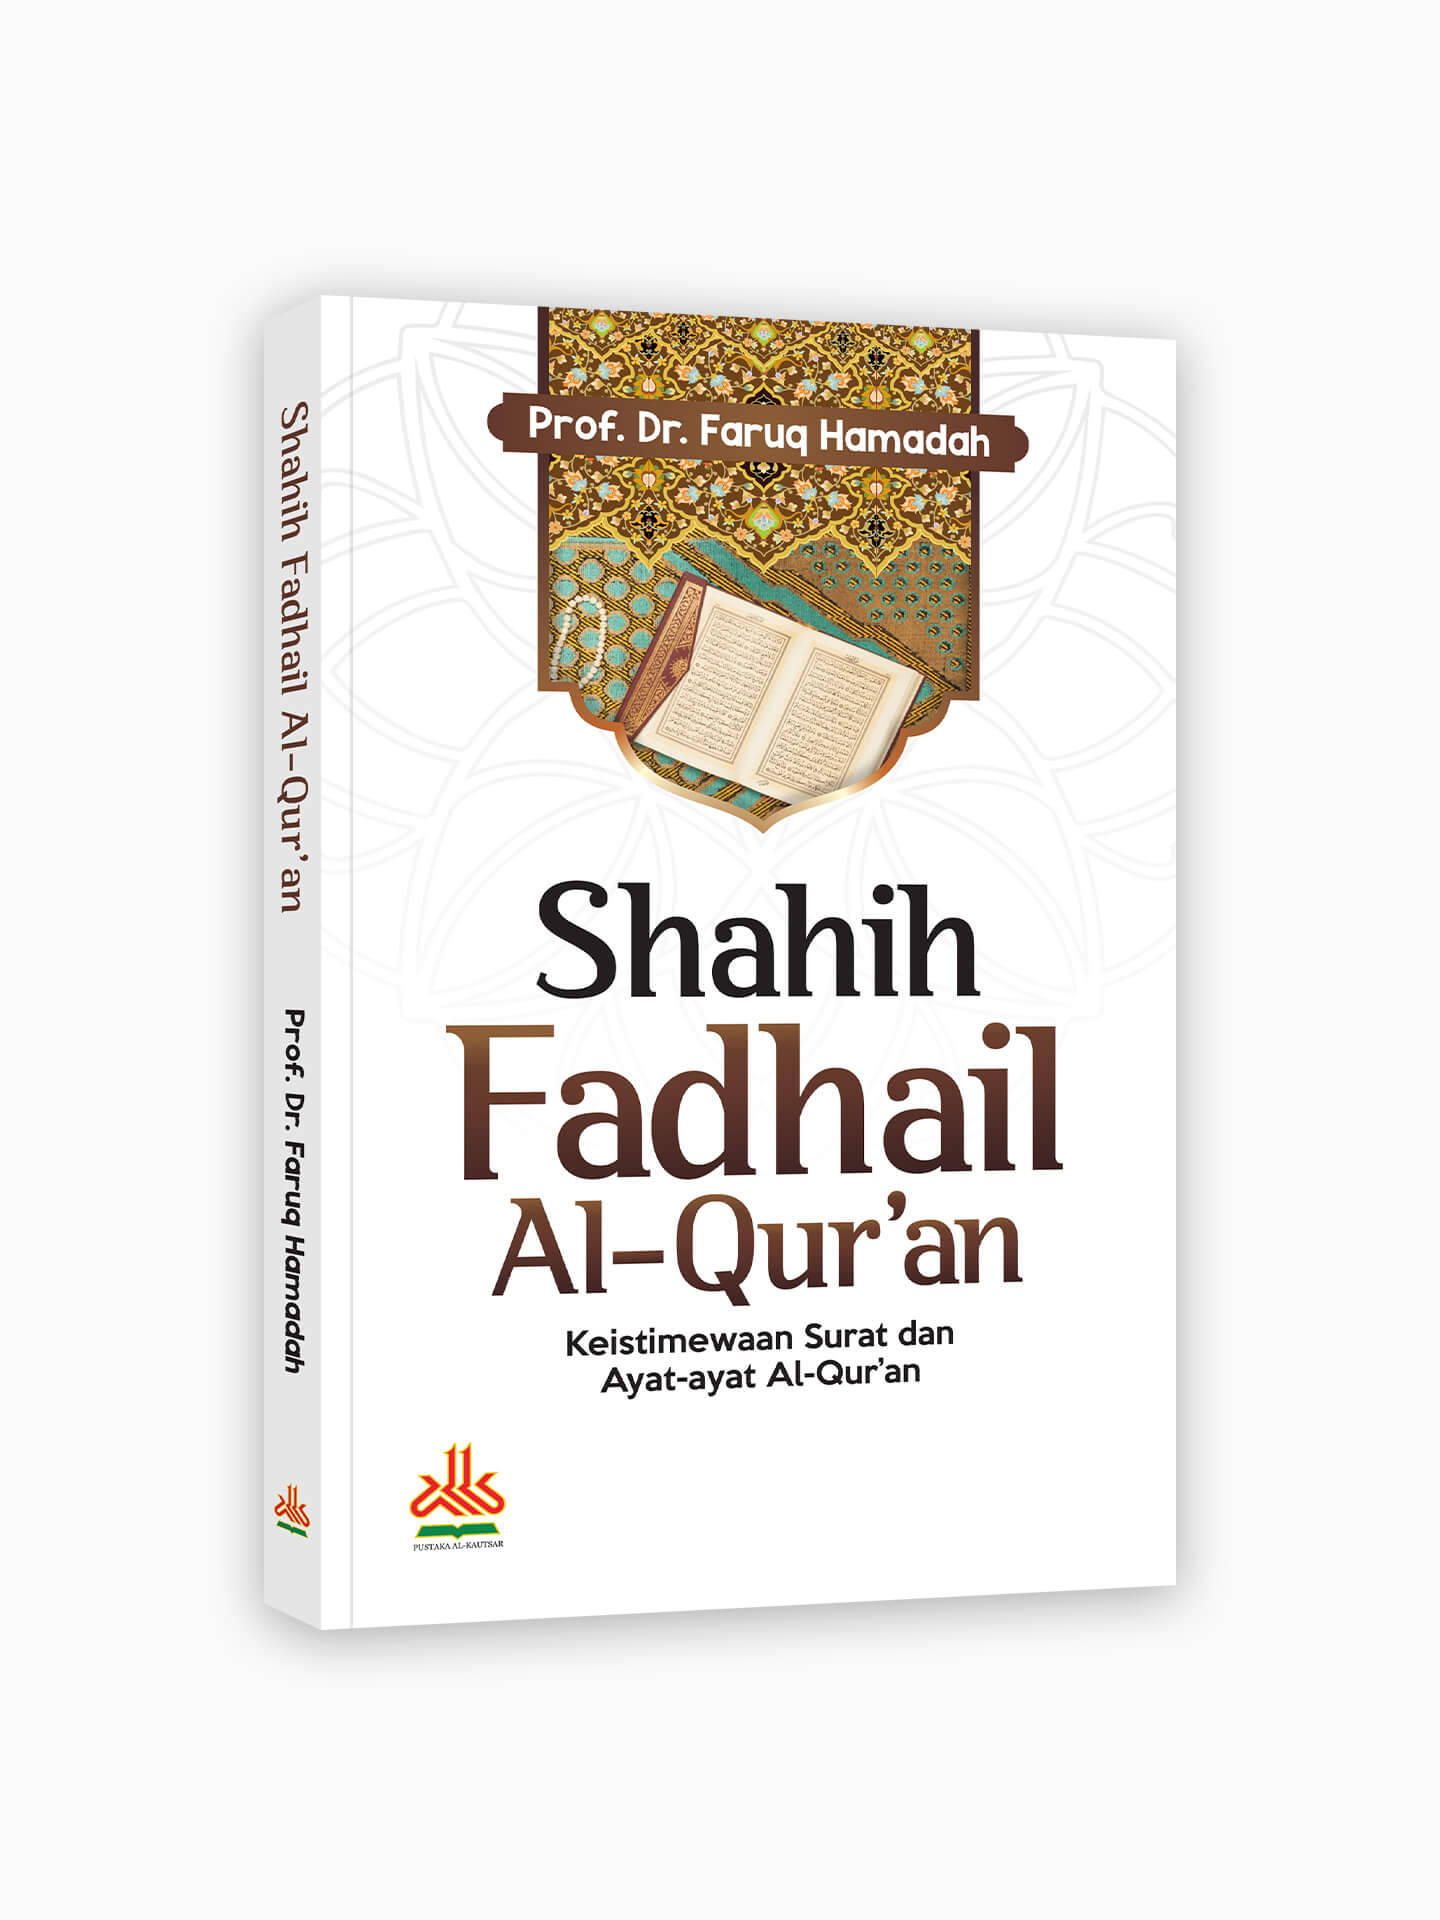 Shahih Fadhail Al-Qur'an : Keistimewaan Surat dan Ayat-ayat Al-Qur'an